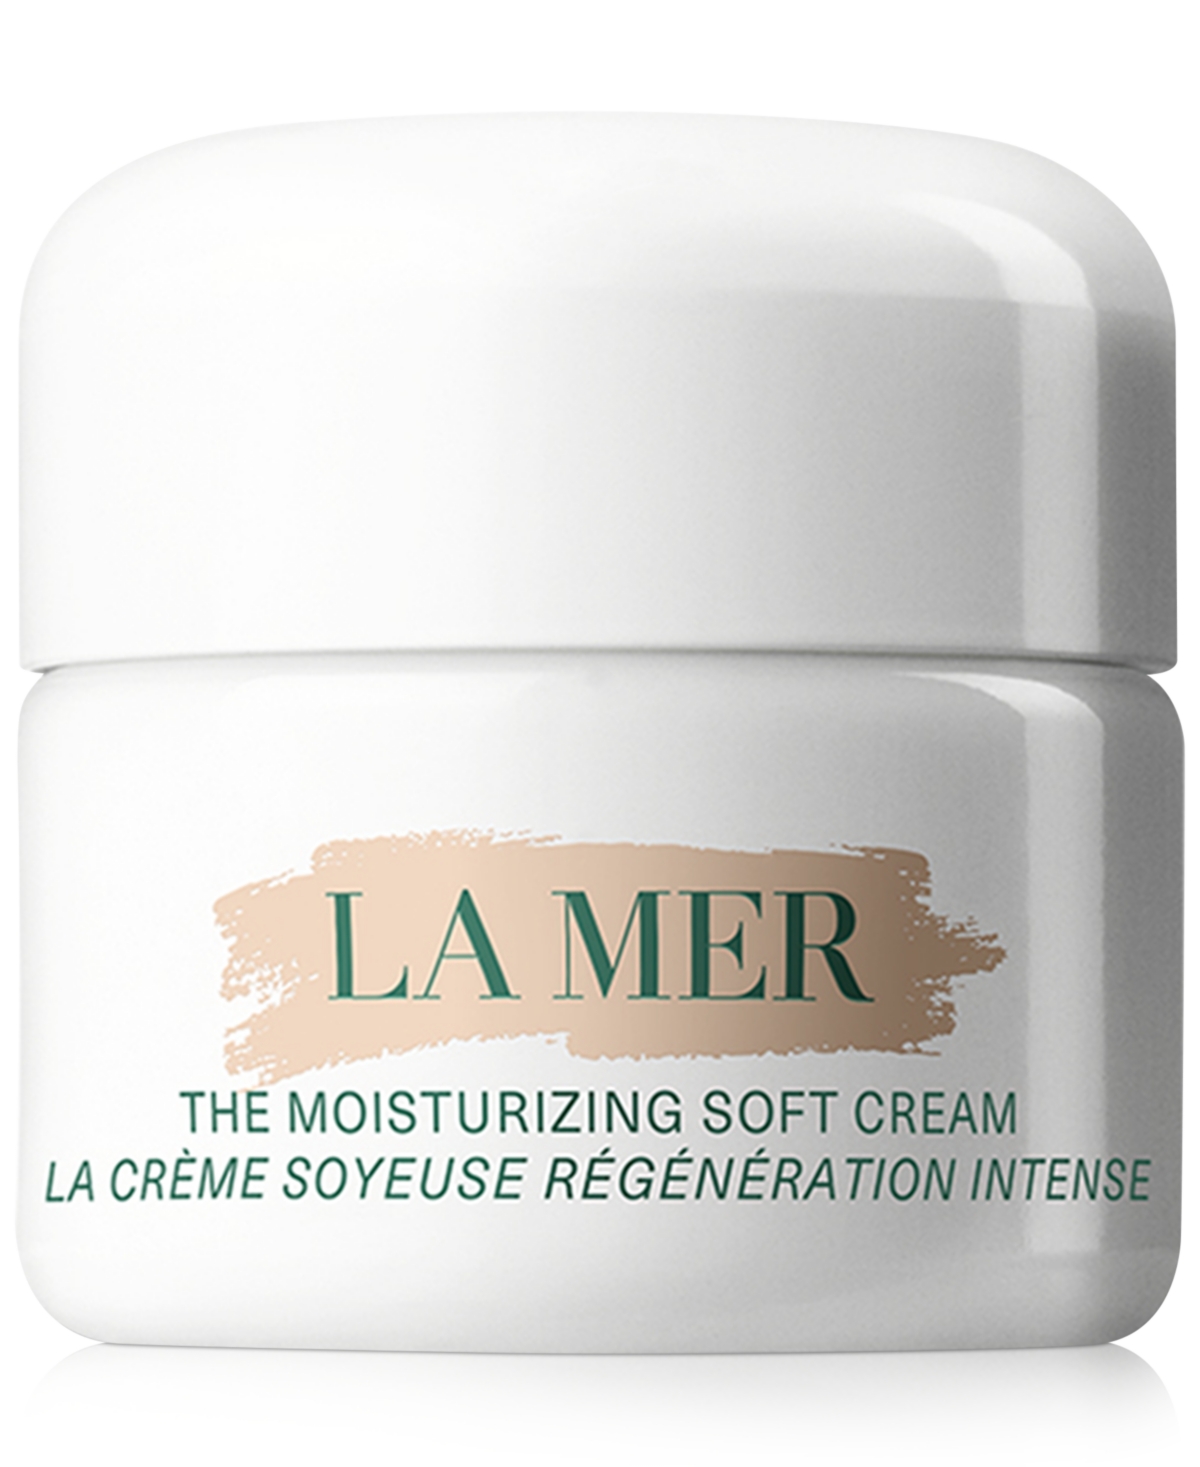 La Mer The Moisturizing Soft Cream, 0.5 Oz.